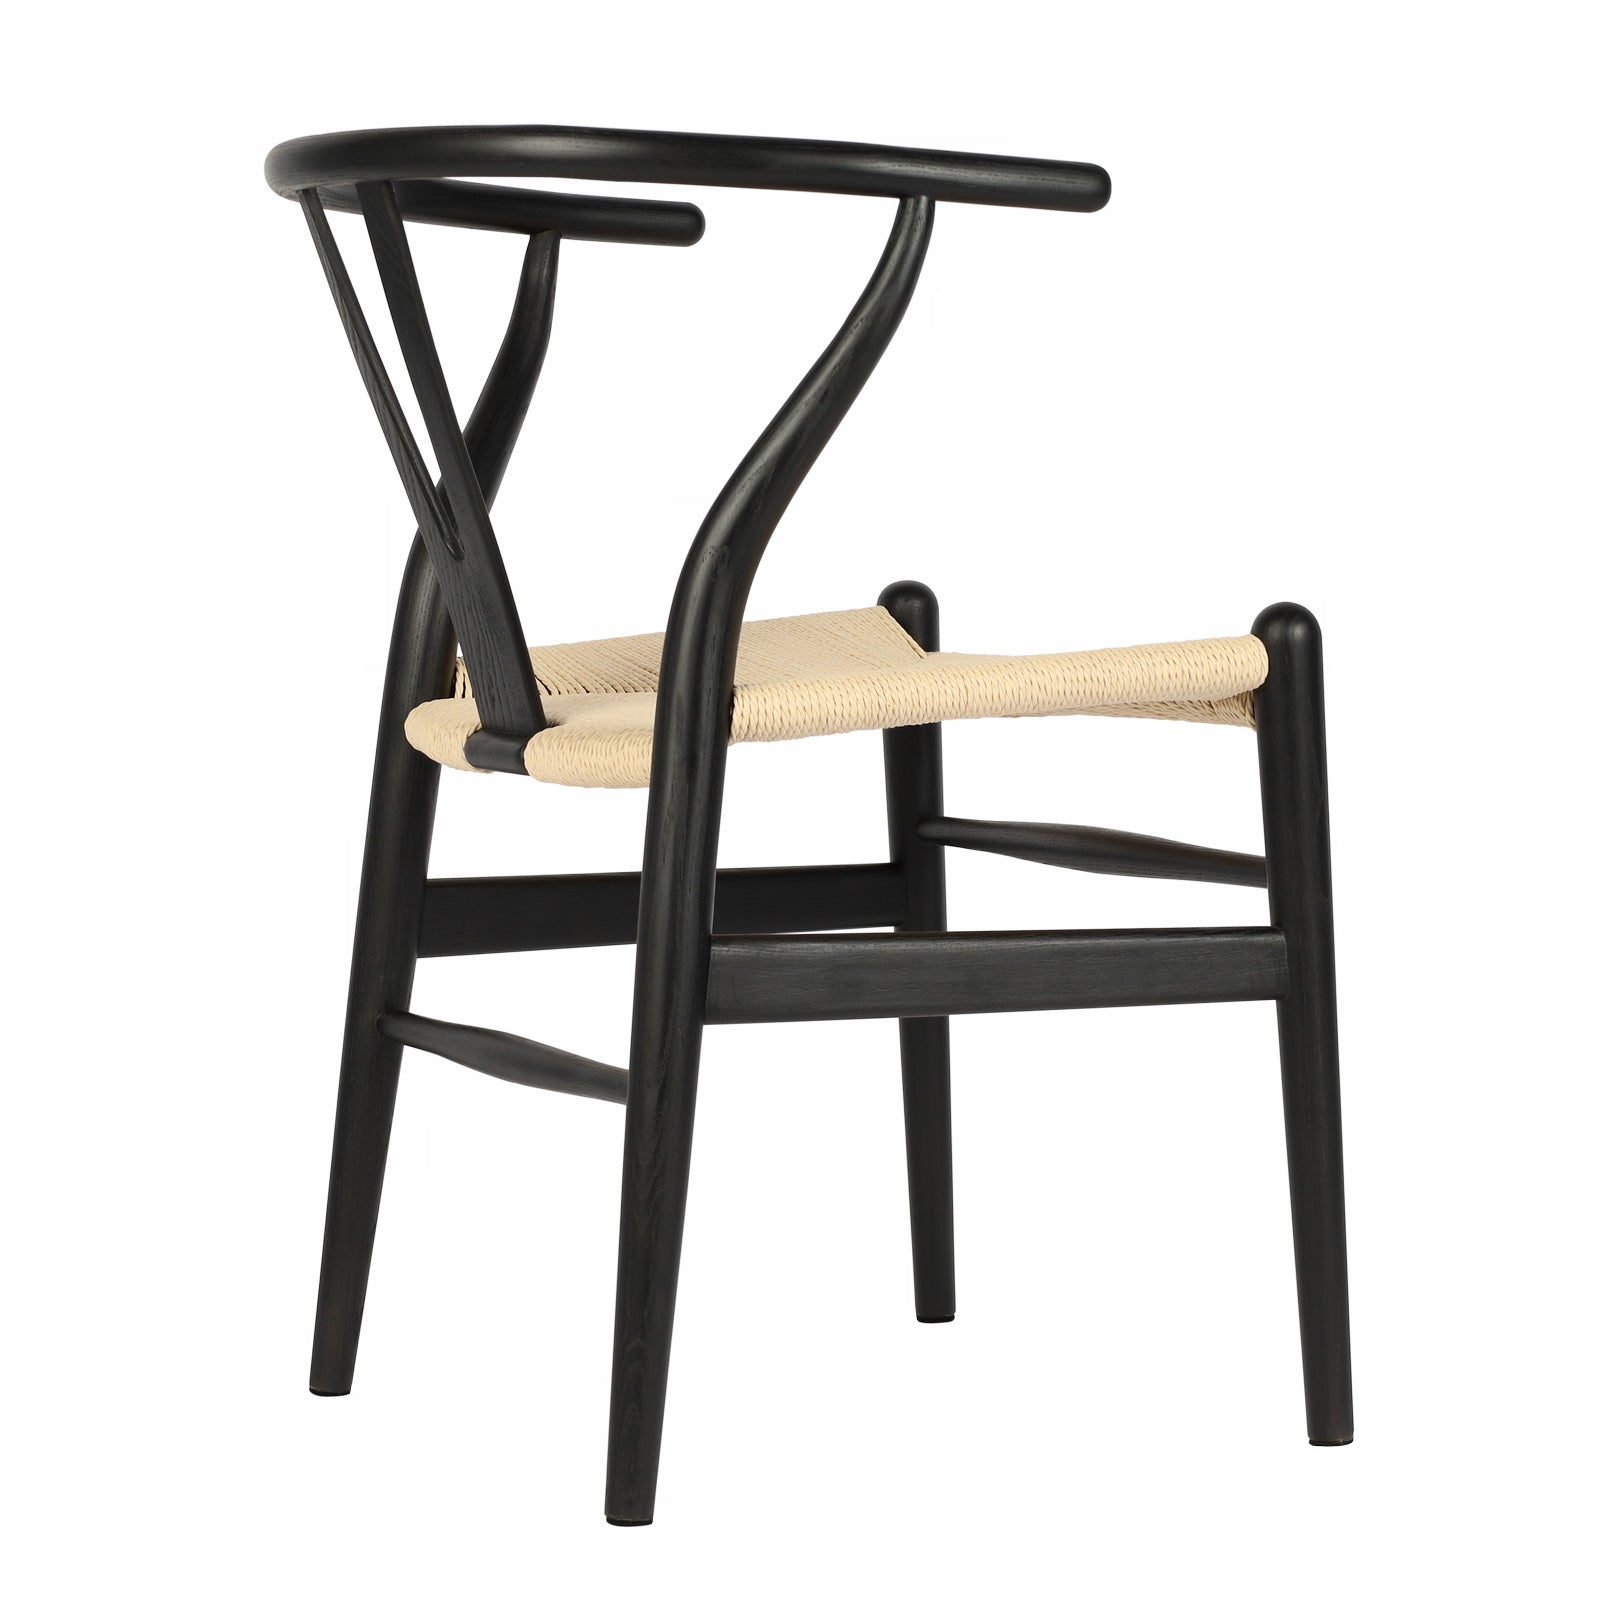 Wishbone Chair Hans Wegner -Natural Black